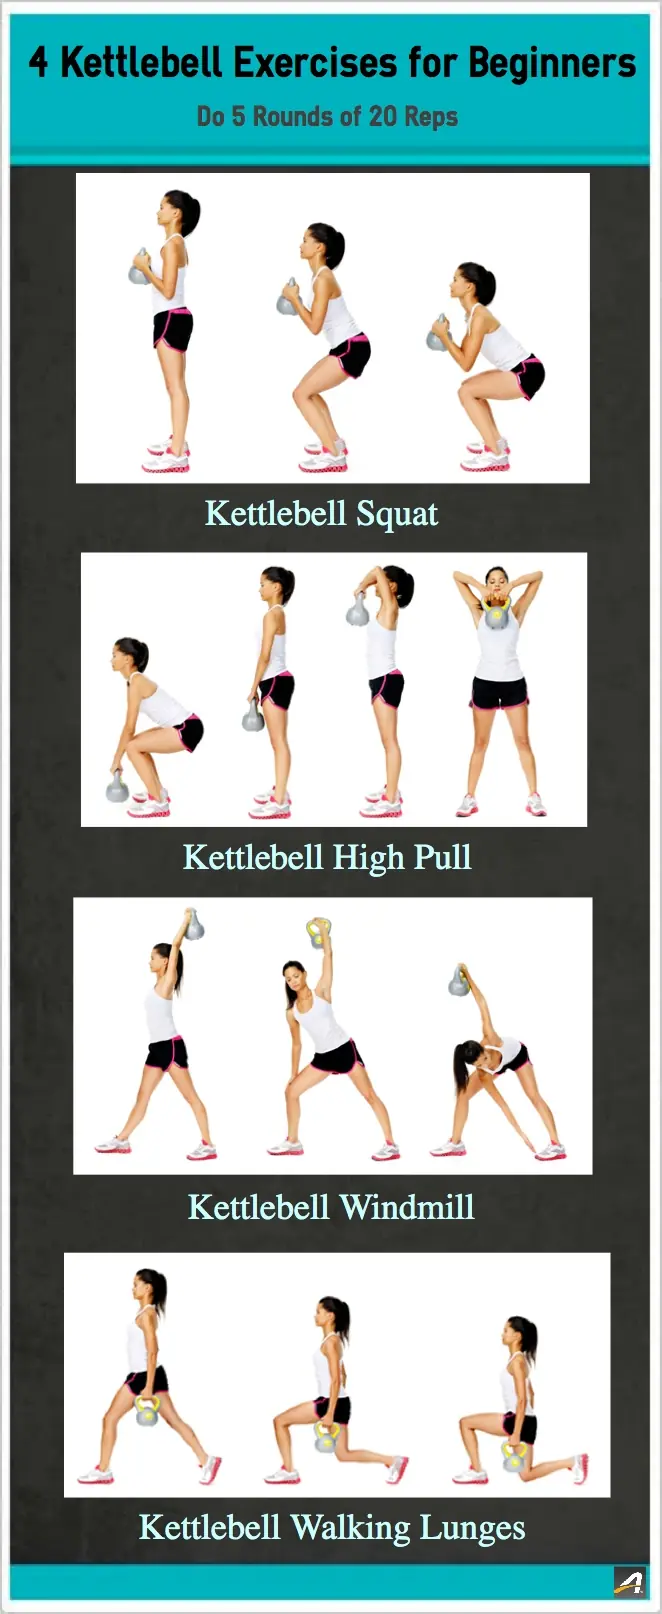 4 Kettlebell Exercises for Beginners ACTIVE